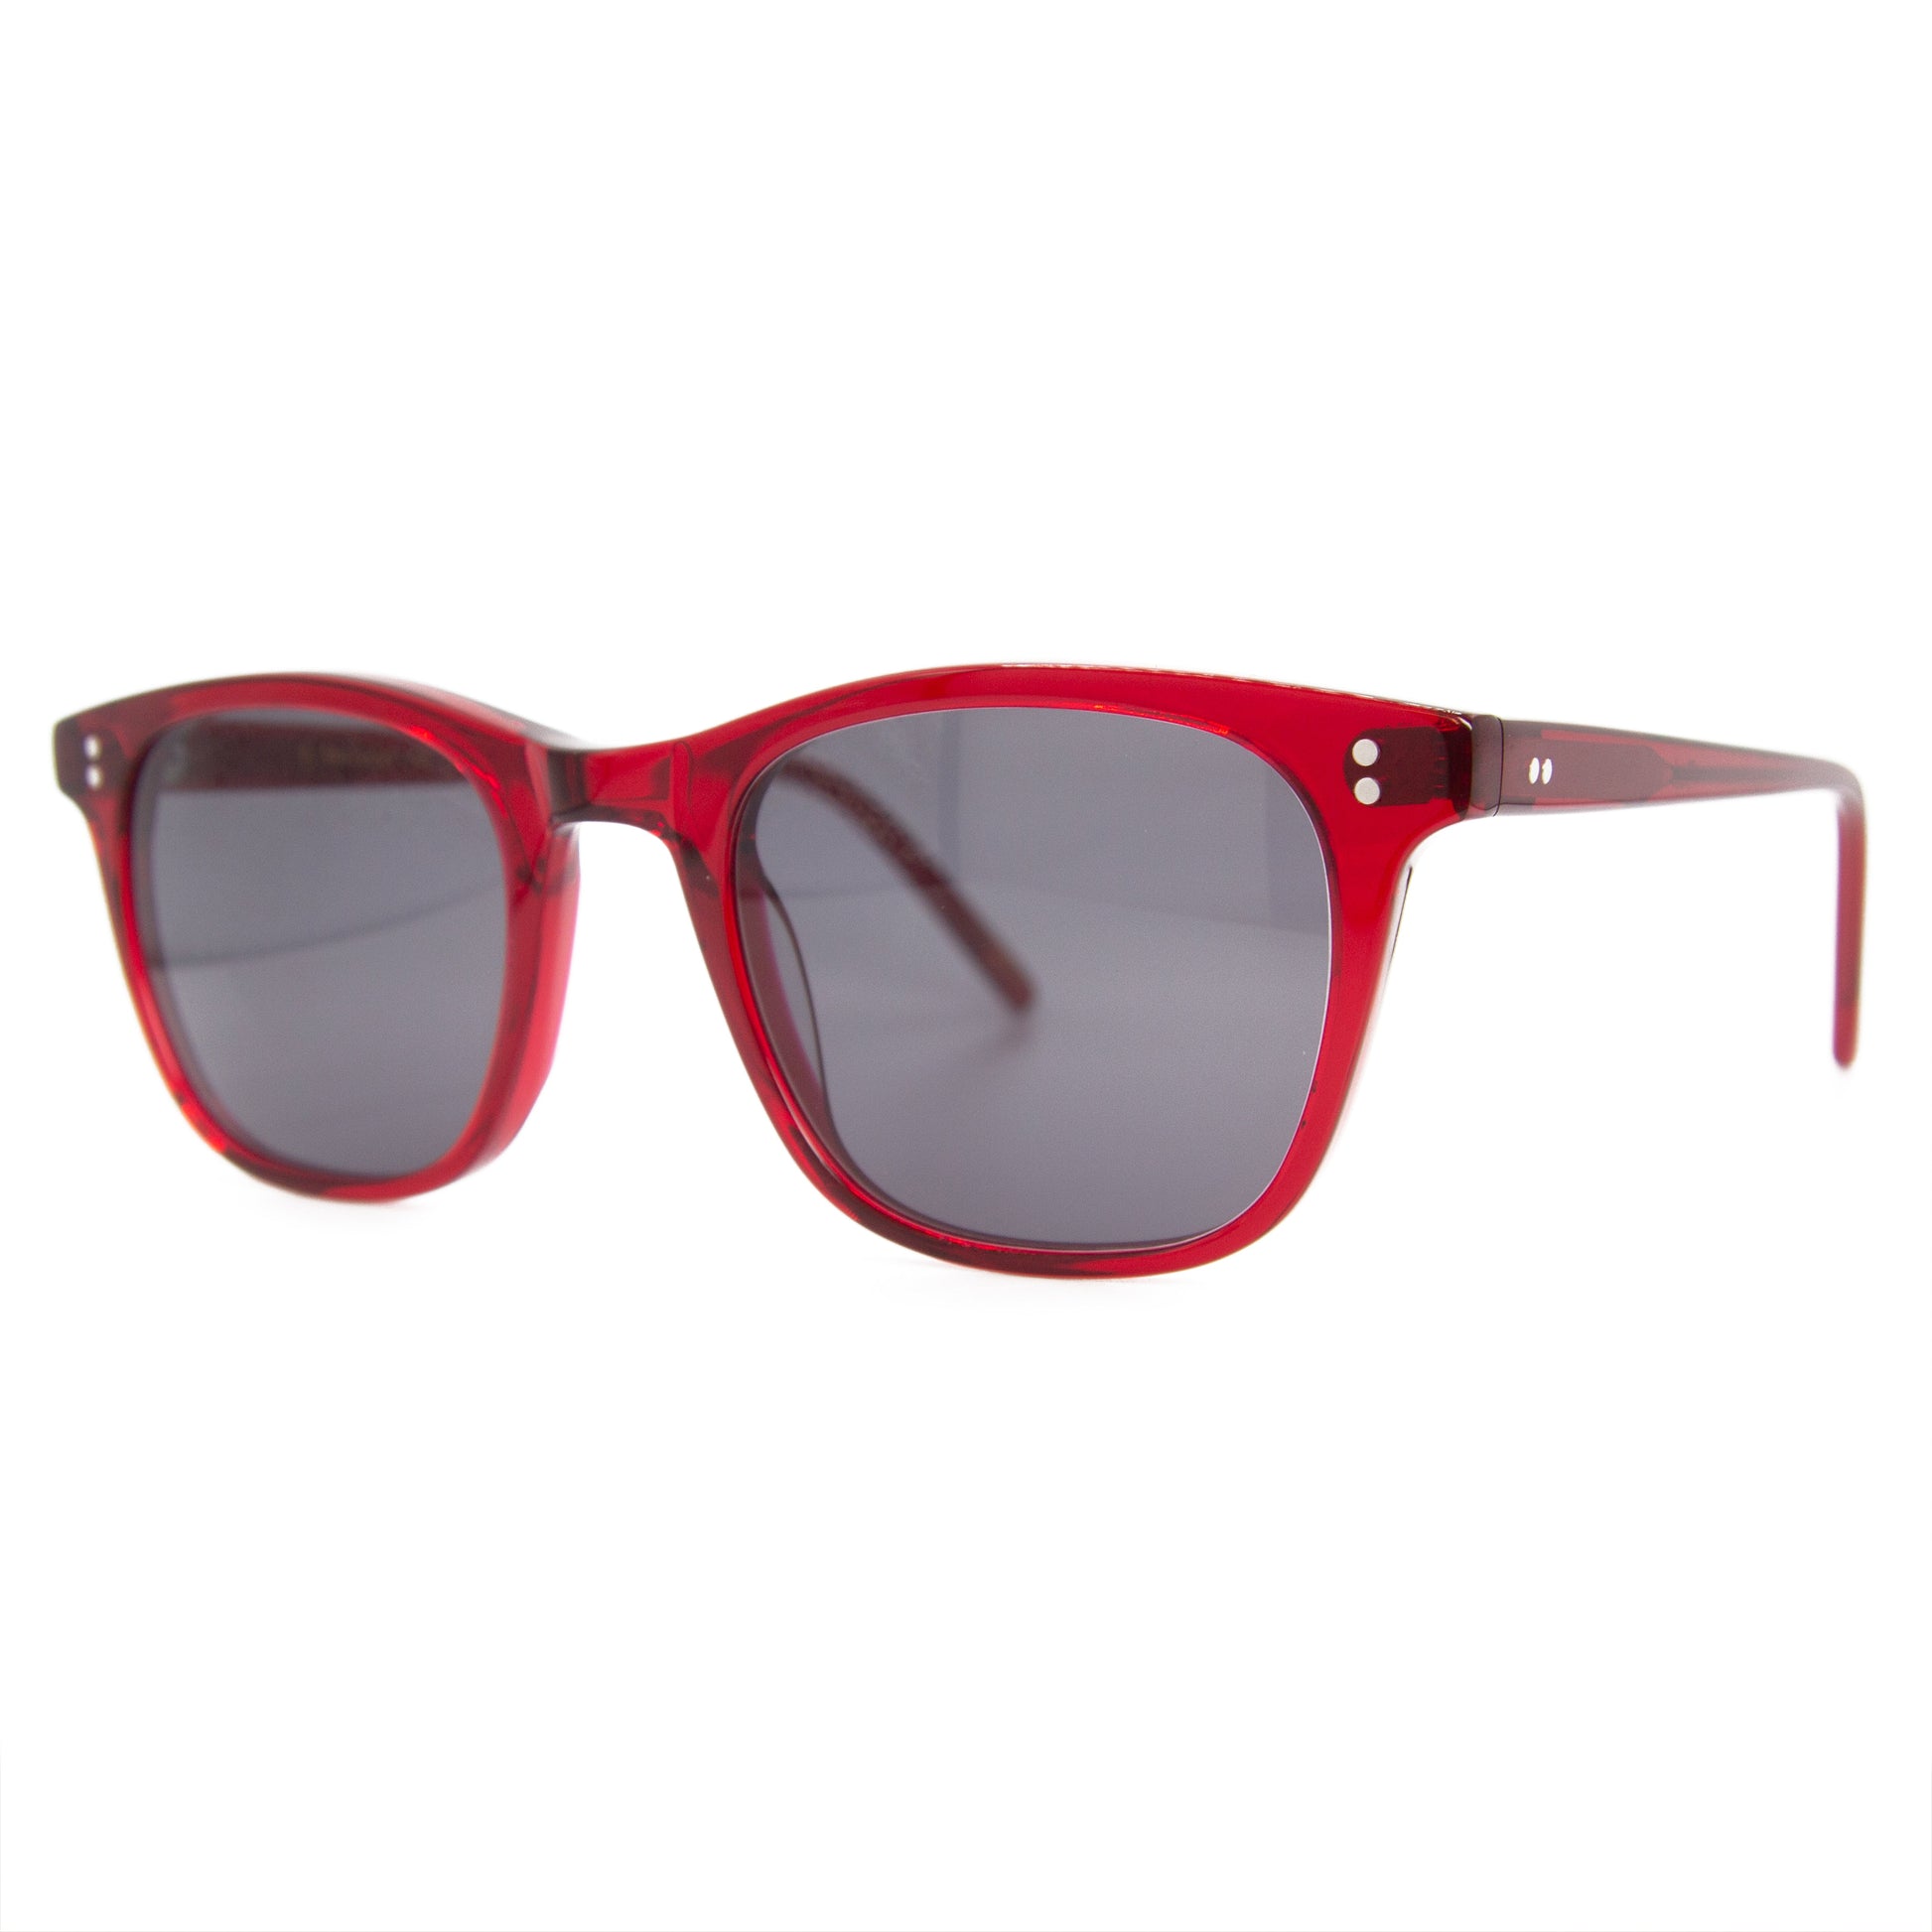 3 brothers - Yai Yai Alki - Red - Prescription Sunglasses - Side